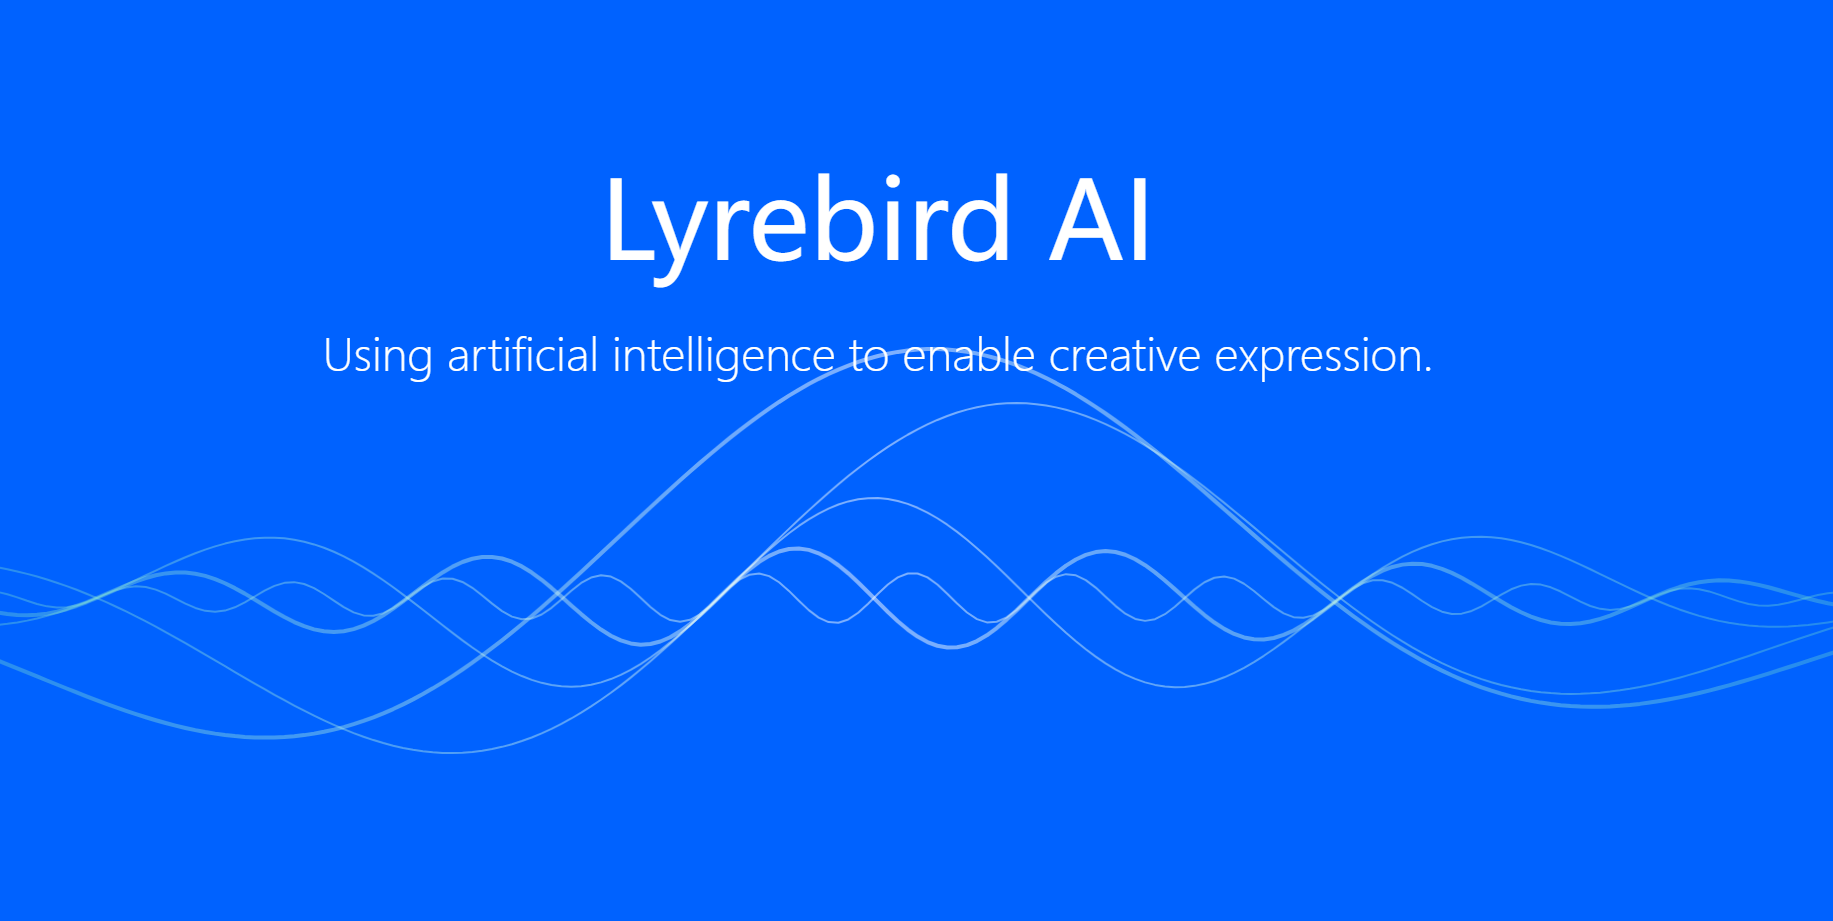 Lyrebird克隆自己的声音软件